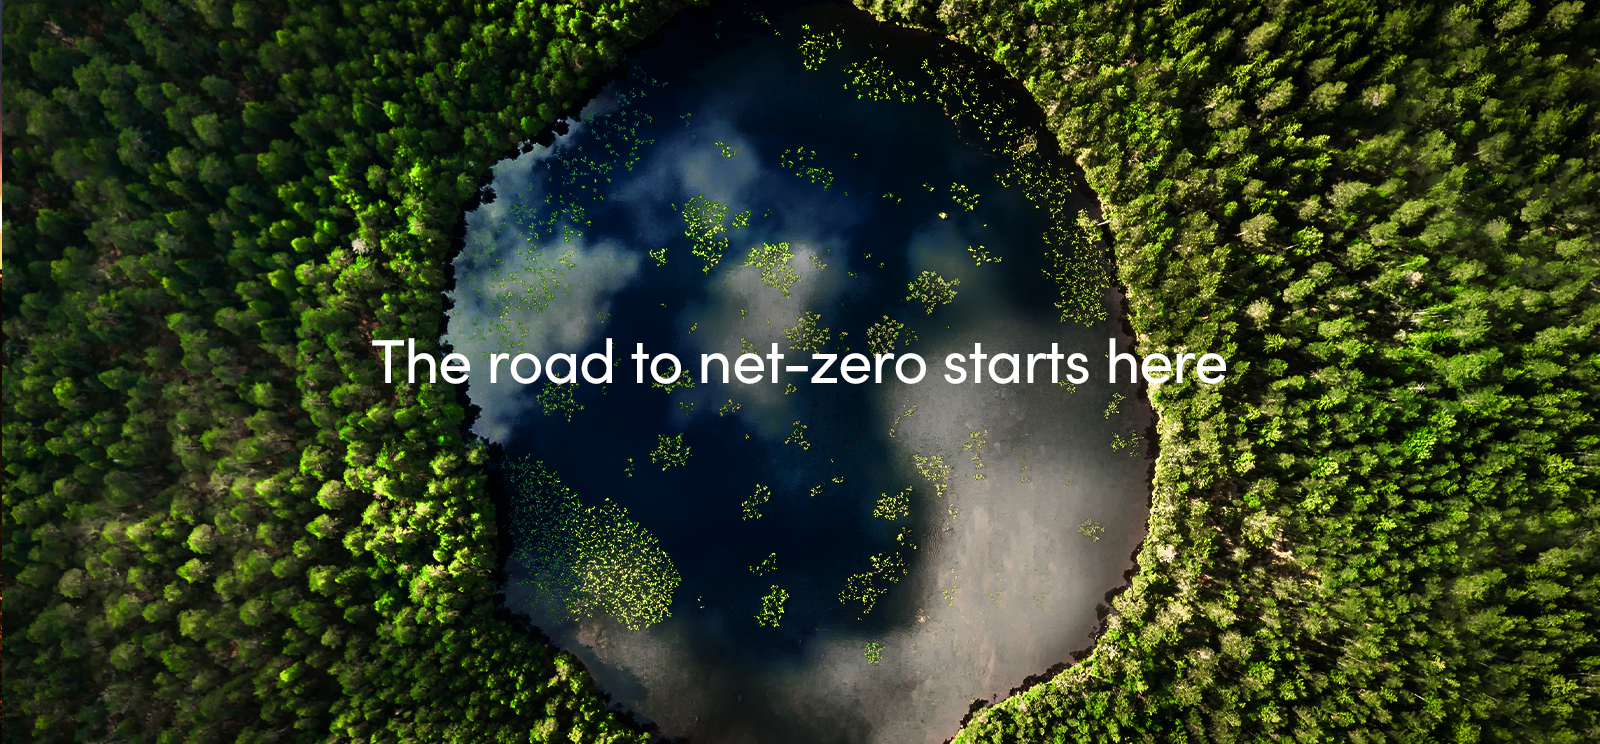 The road to net-zero starts here